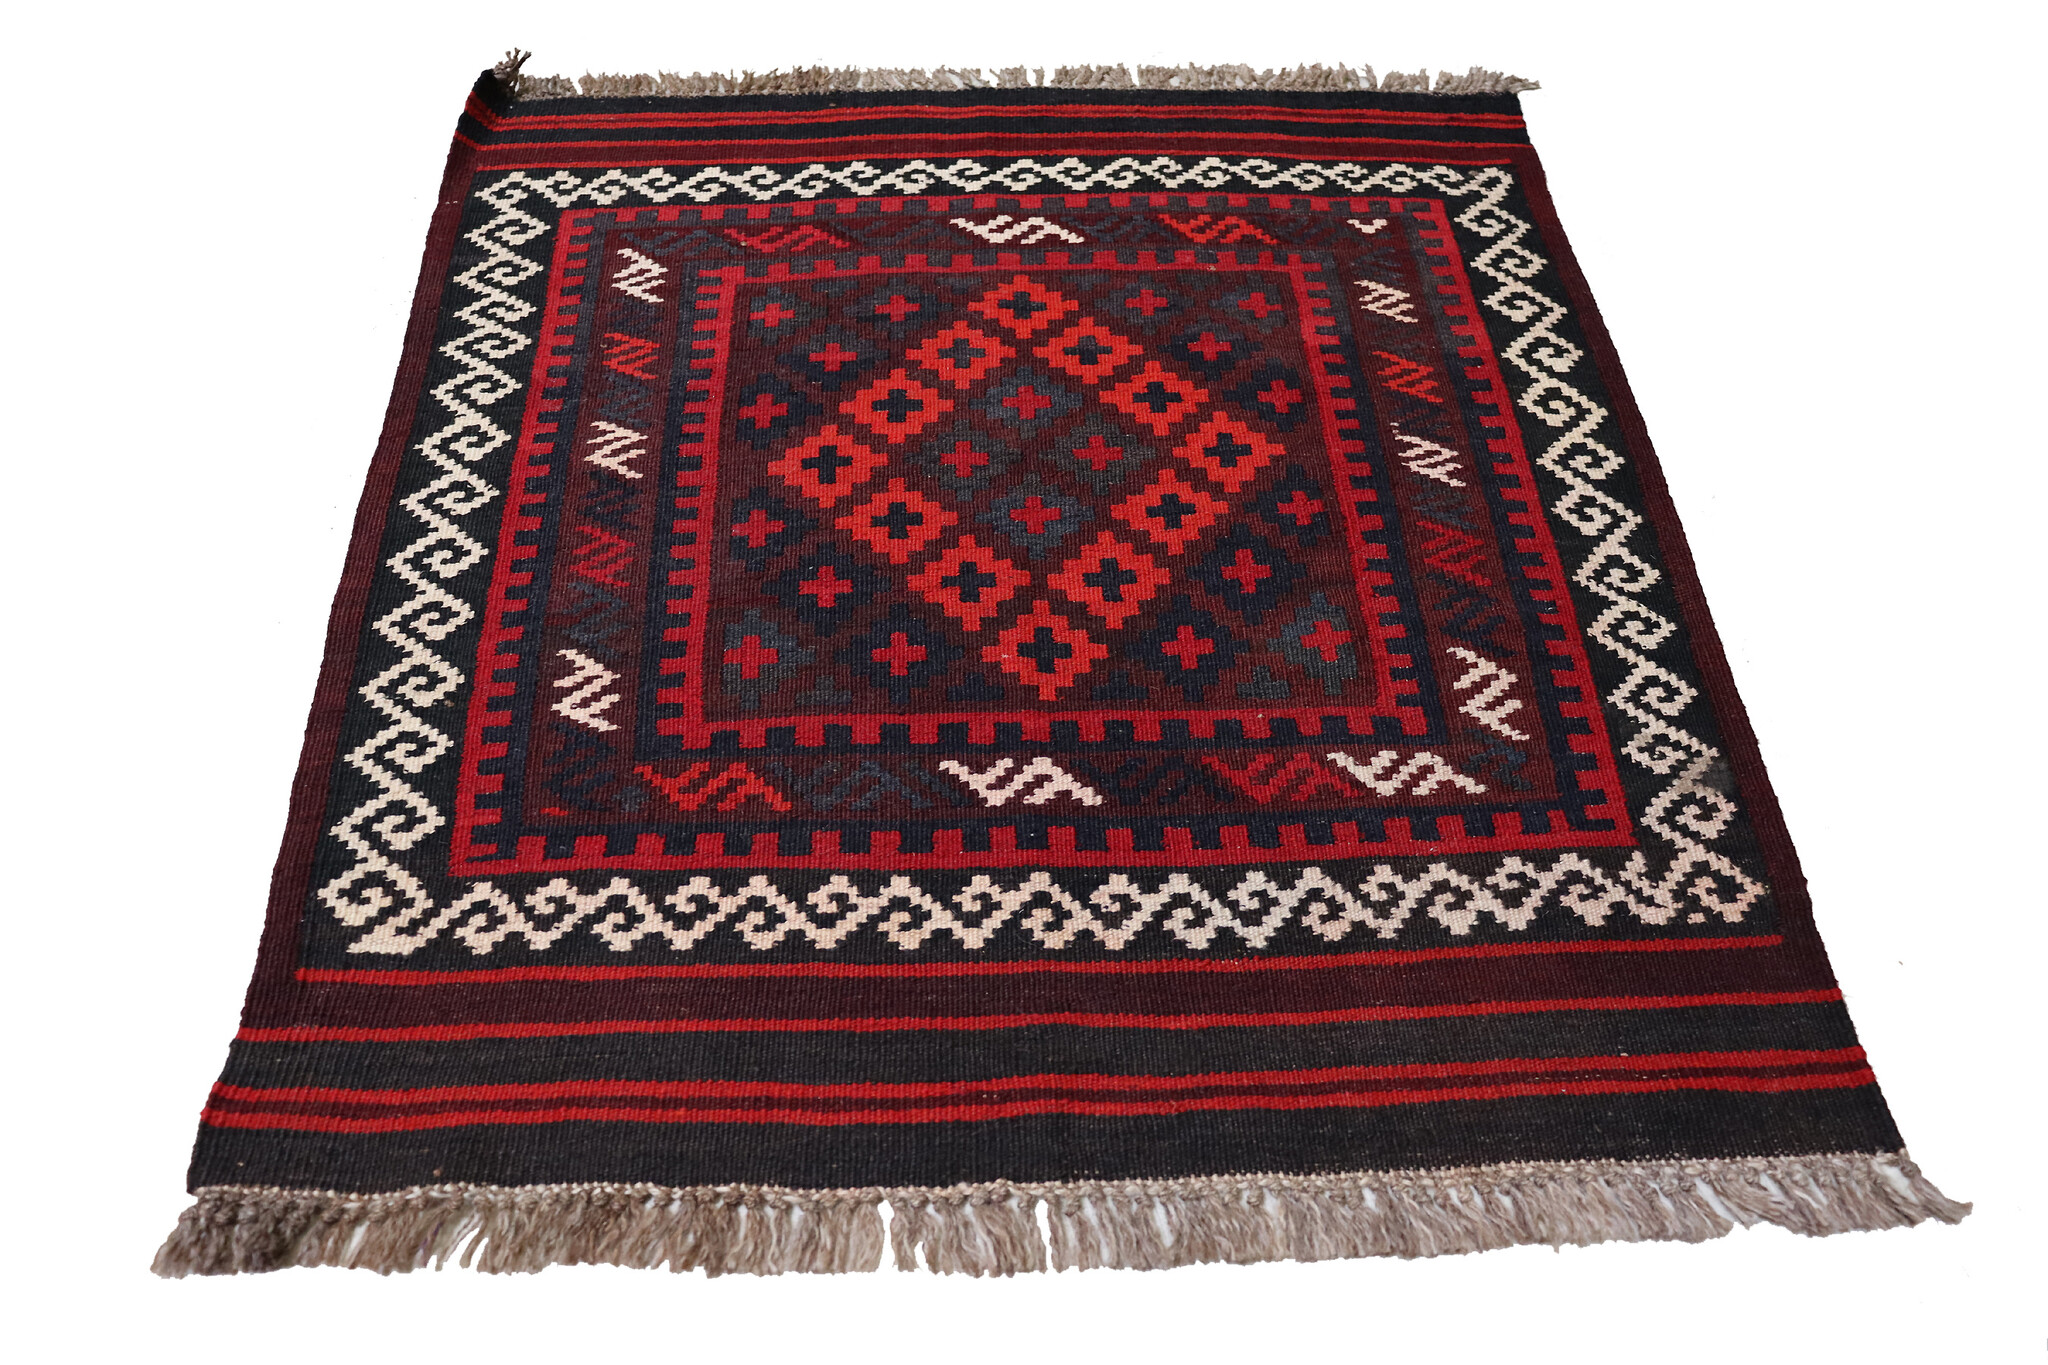 86x77 cm Afghan   nomadic Kilim rug  No:142